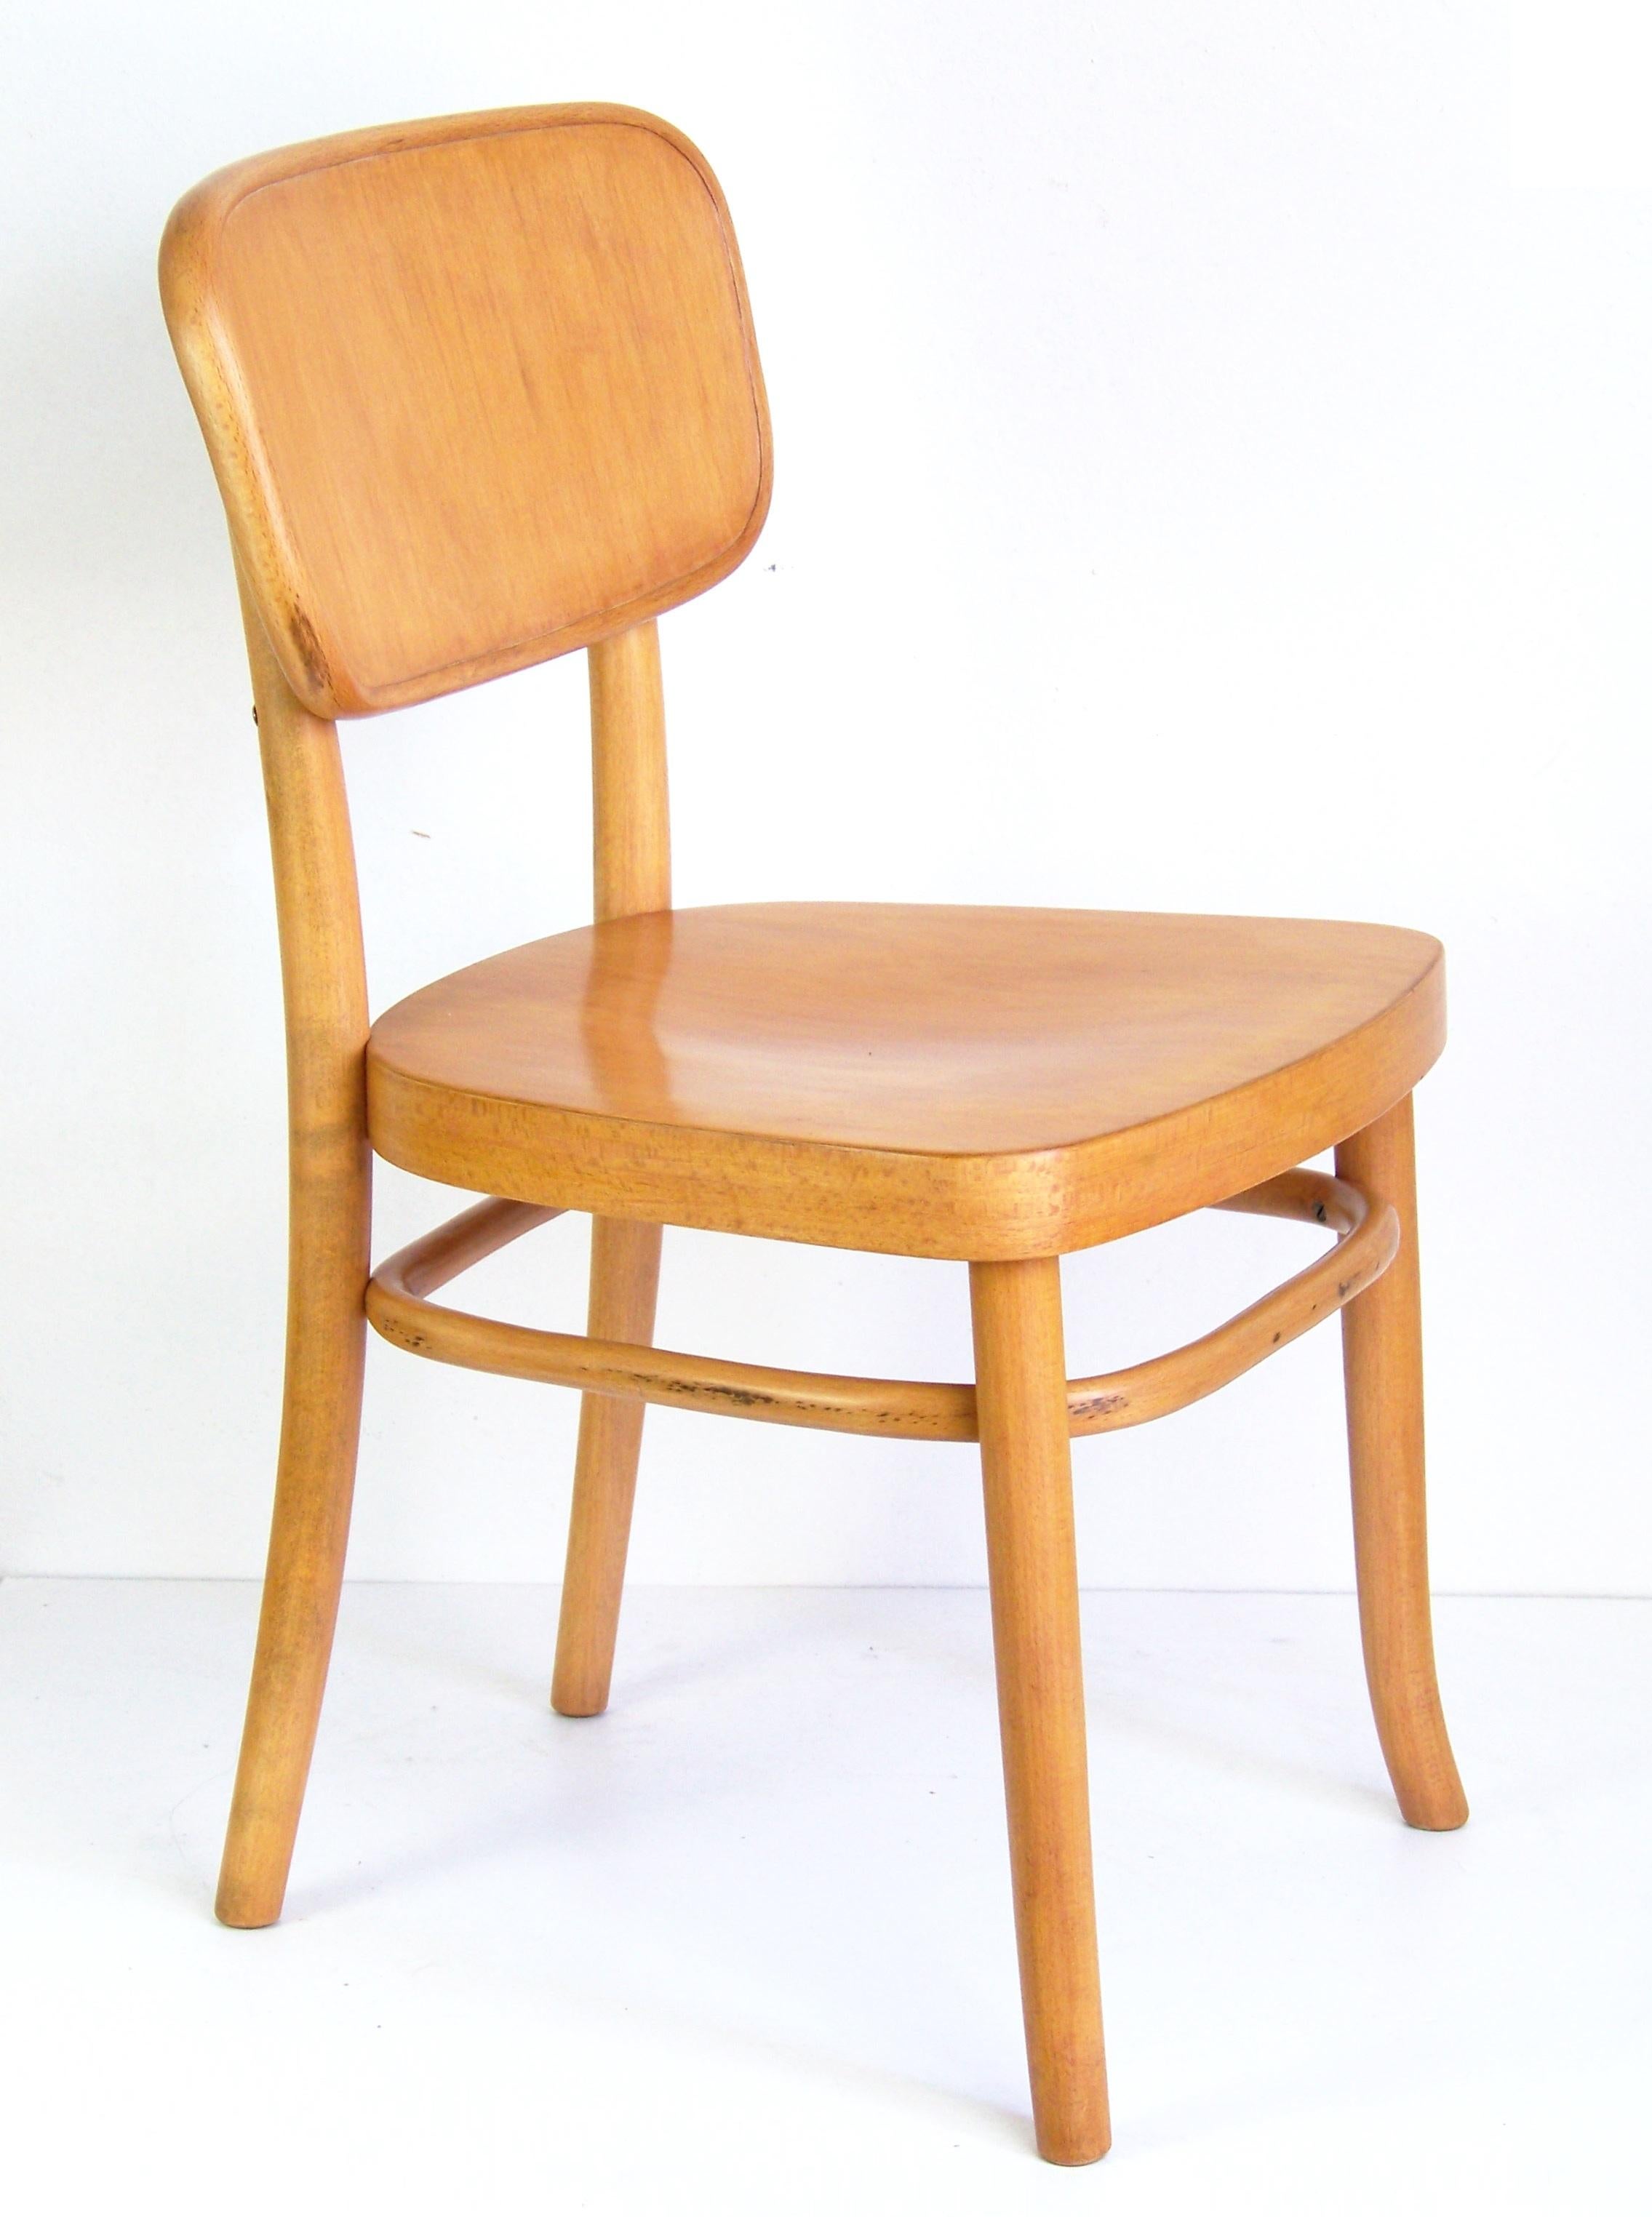 Czech Bauhaus Chair Thonet A283 by Gustav Adolf Schneck in 1928